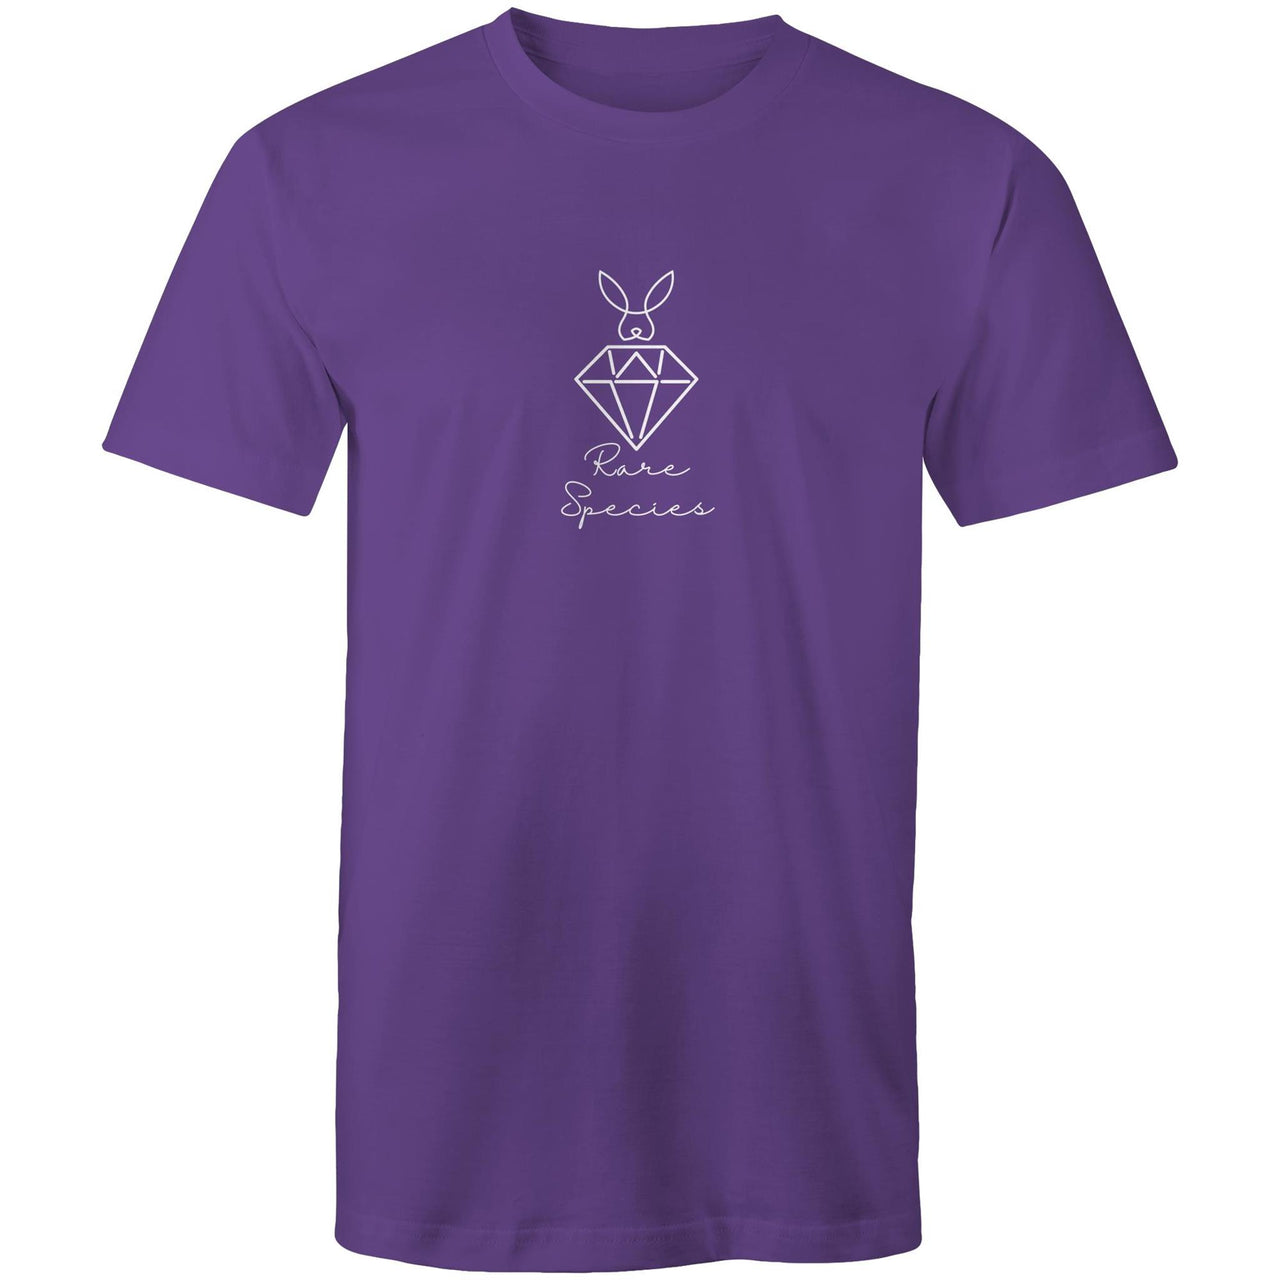 CBF Rare Species Crew T-Shirt purple by CBF Clothing